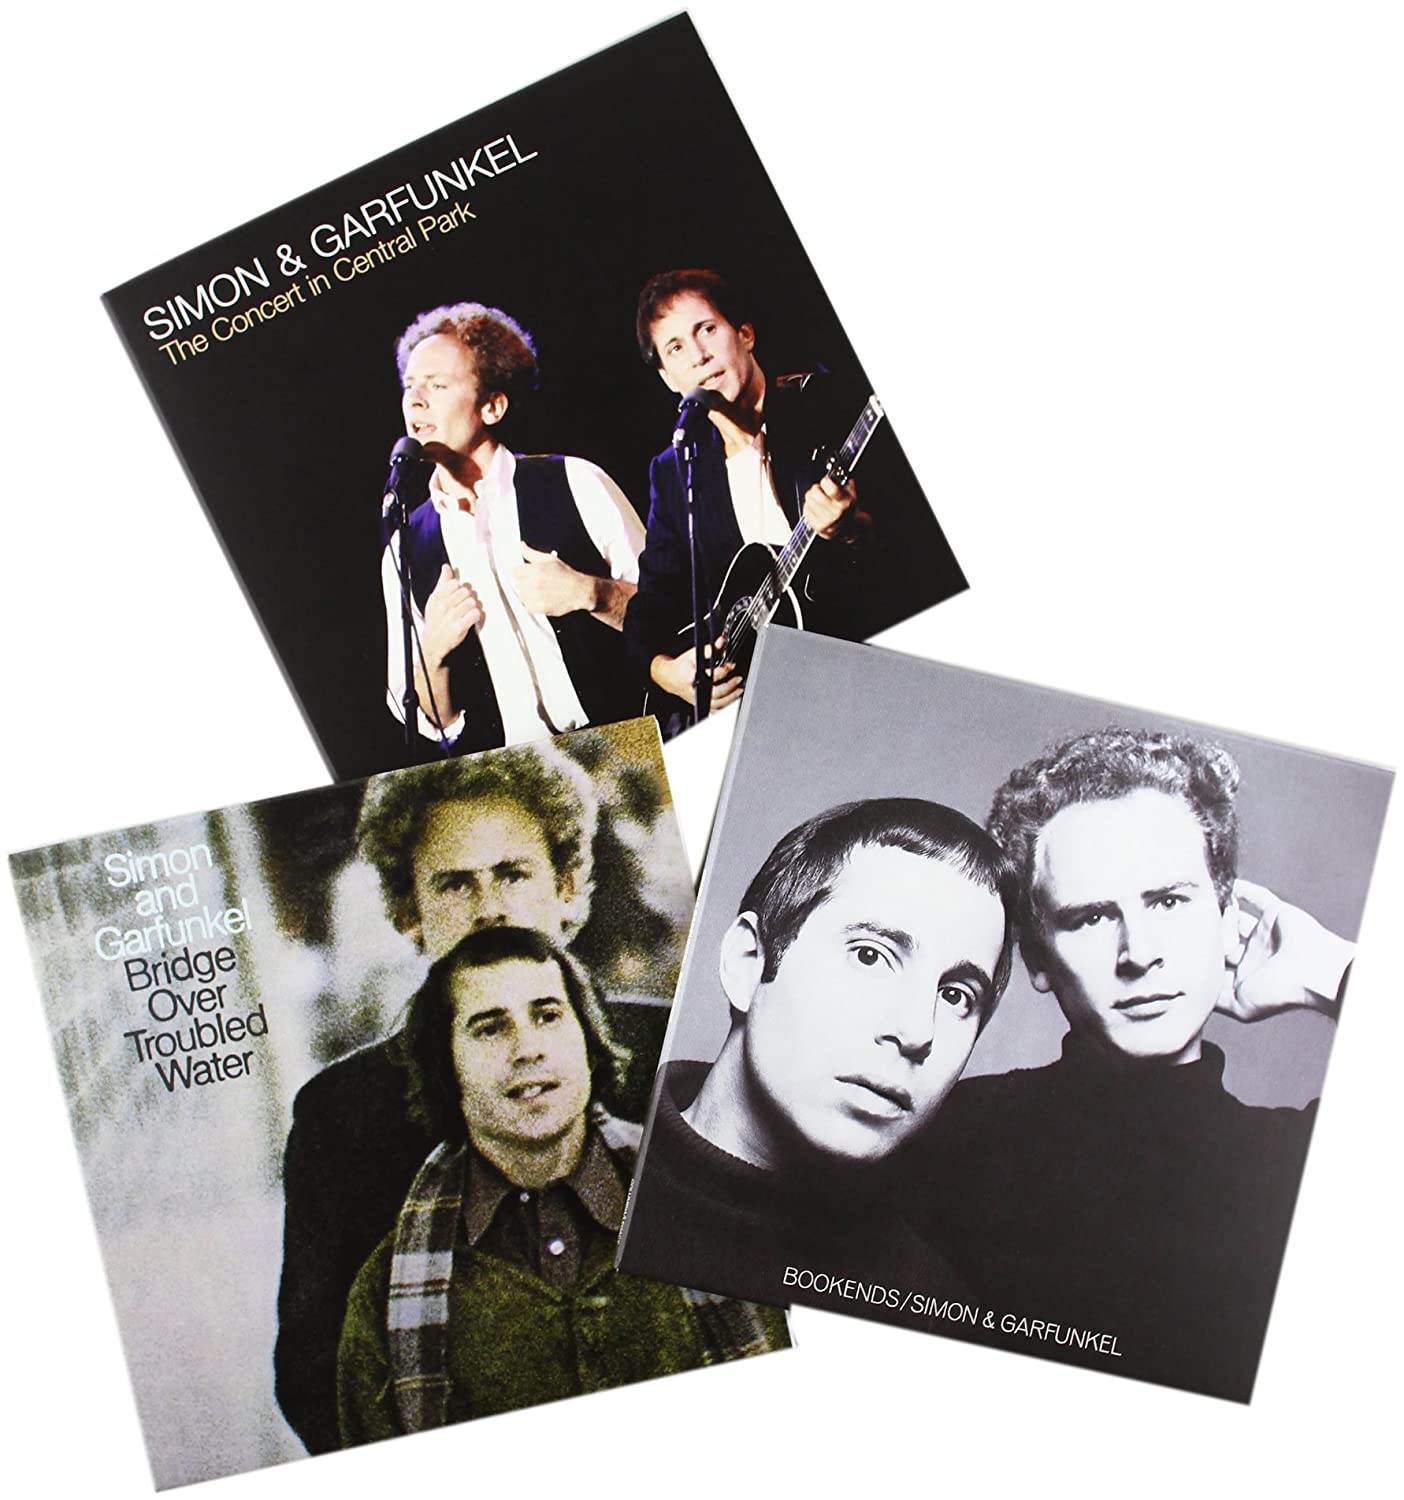 Simon & Garfunkel (사이먼 앤 가펑클) - The Collection